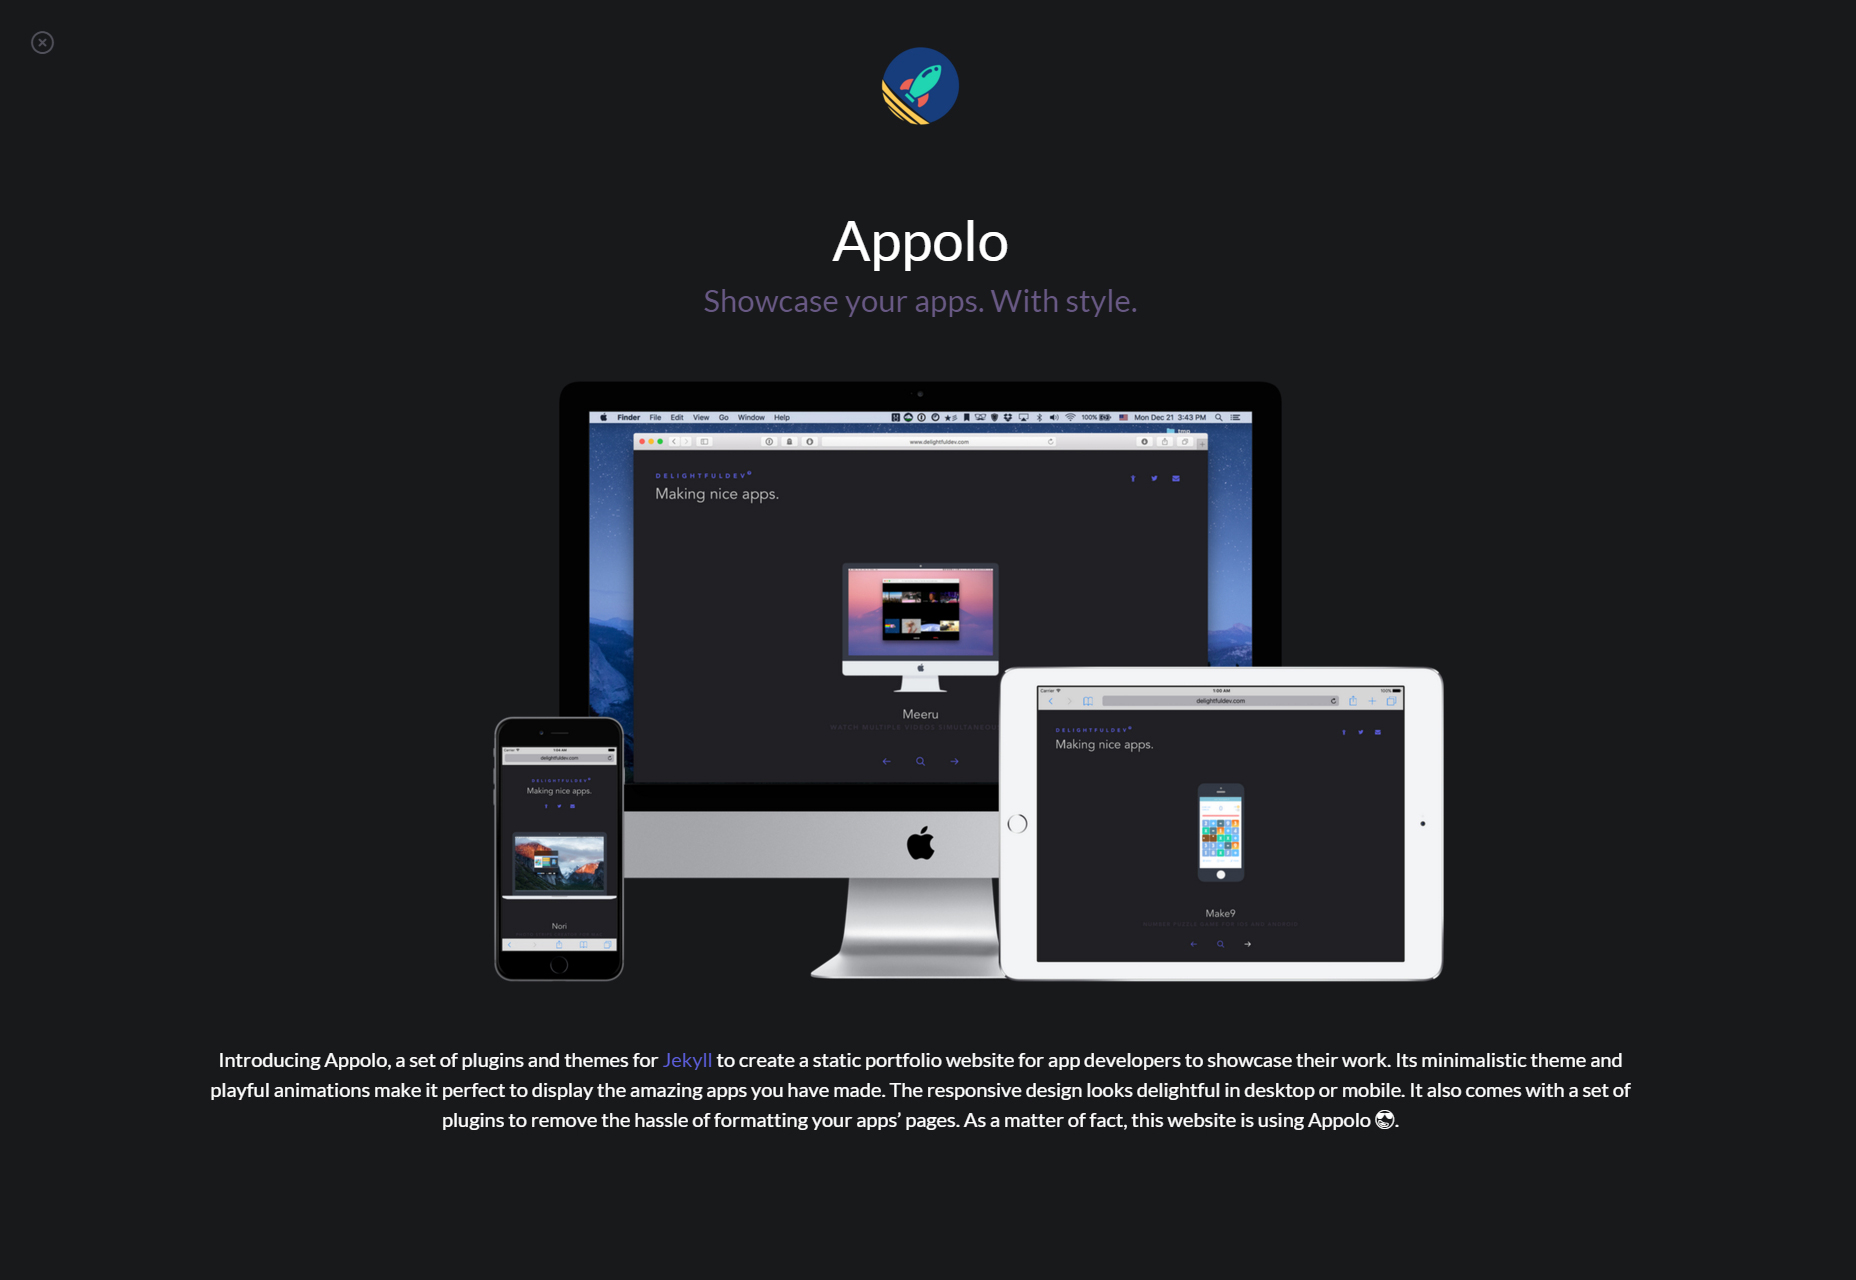 Apolo: Stylová aplikace Showcasing